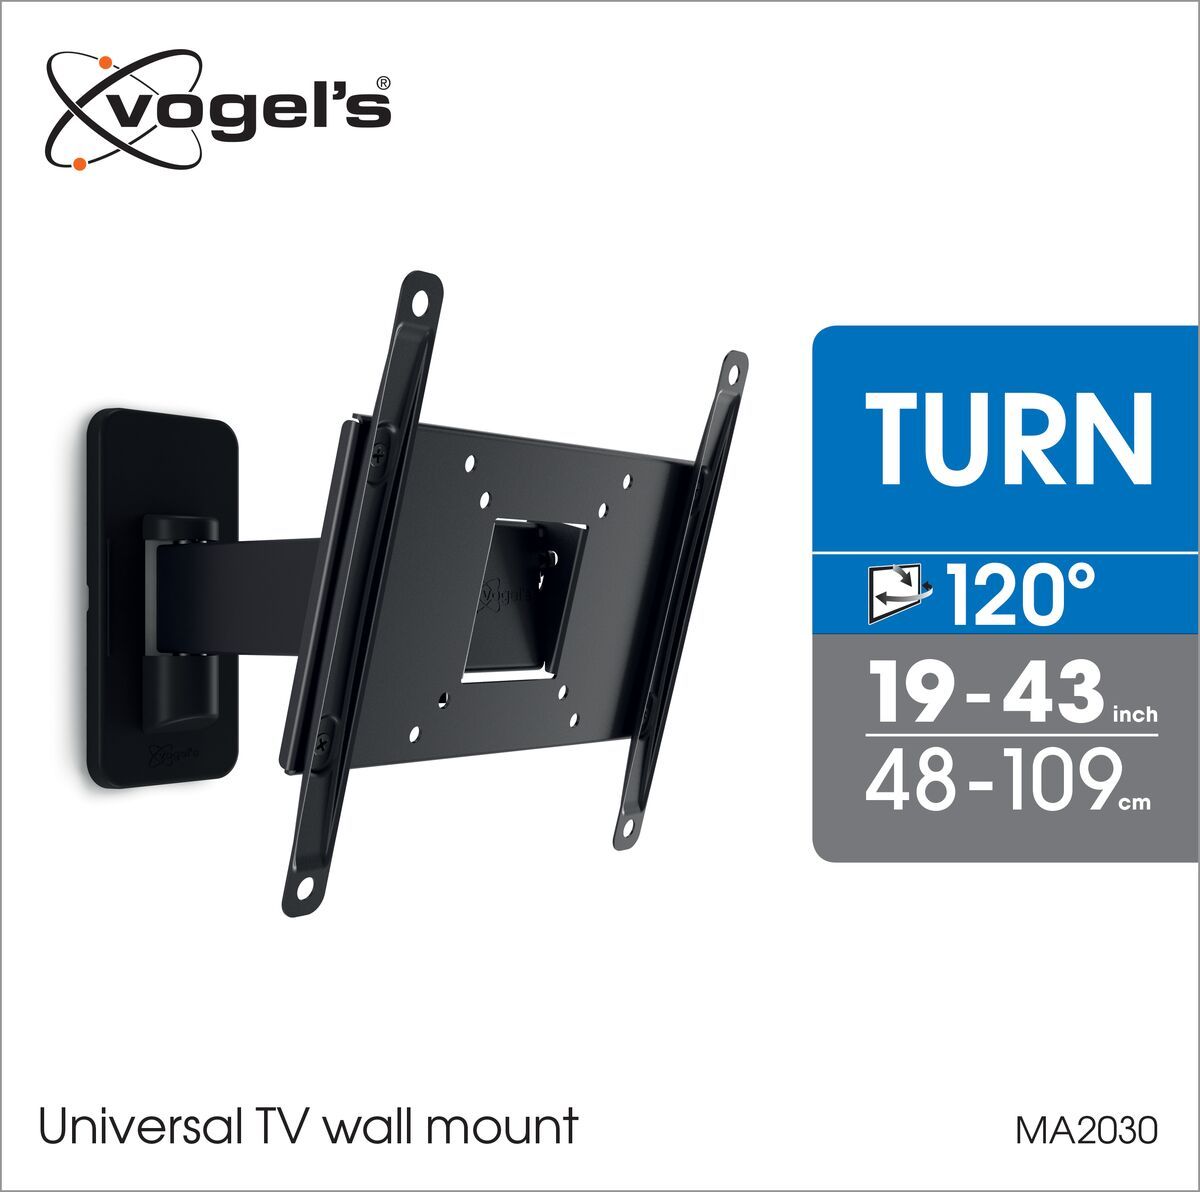 Vogel's MA 2030 - поворотный кронштейн для телевизора - Подходит для телевизоров от 19 до 43 дюймов - Подвижность (до 120°) - Наклон на угол до 15° - Packaging front